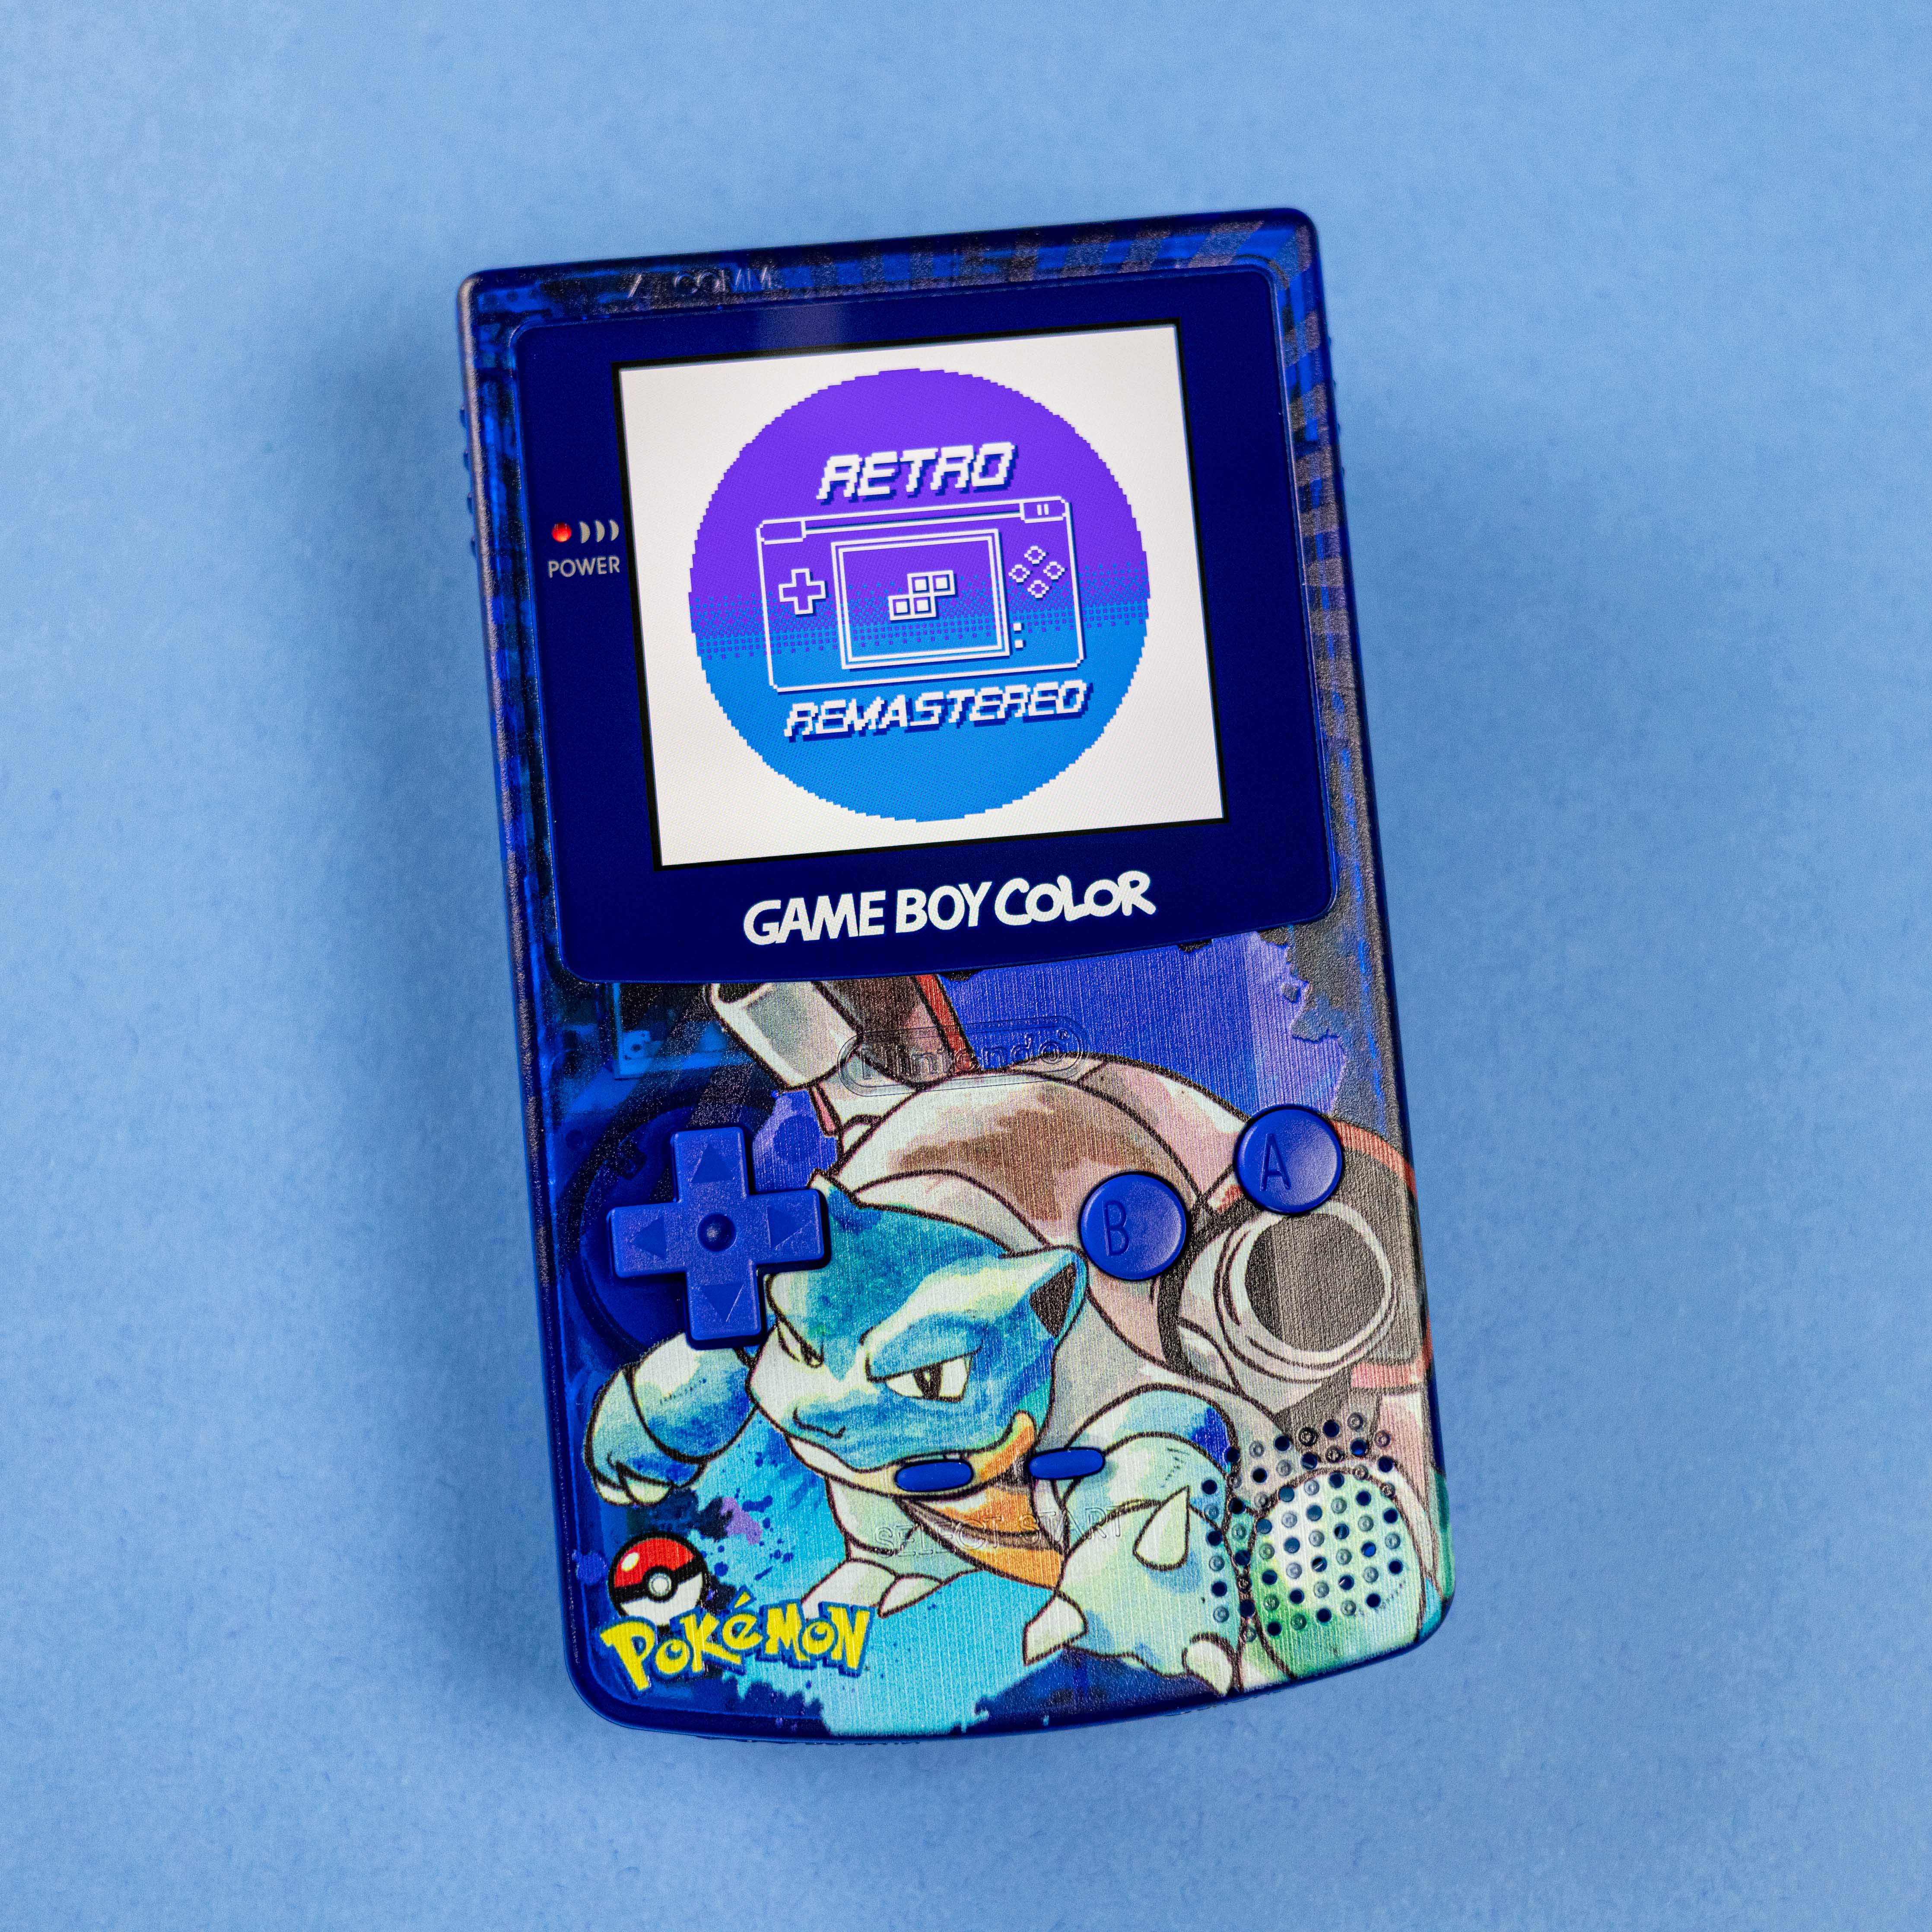 Modded Game Boy Color w/ IPS Display (Blastoise)